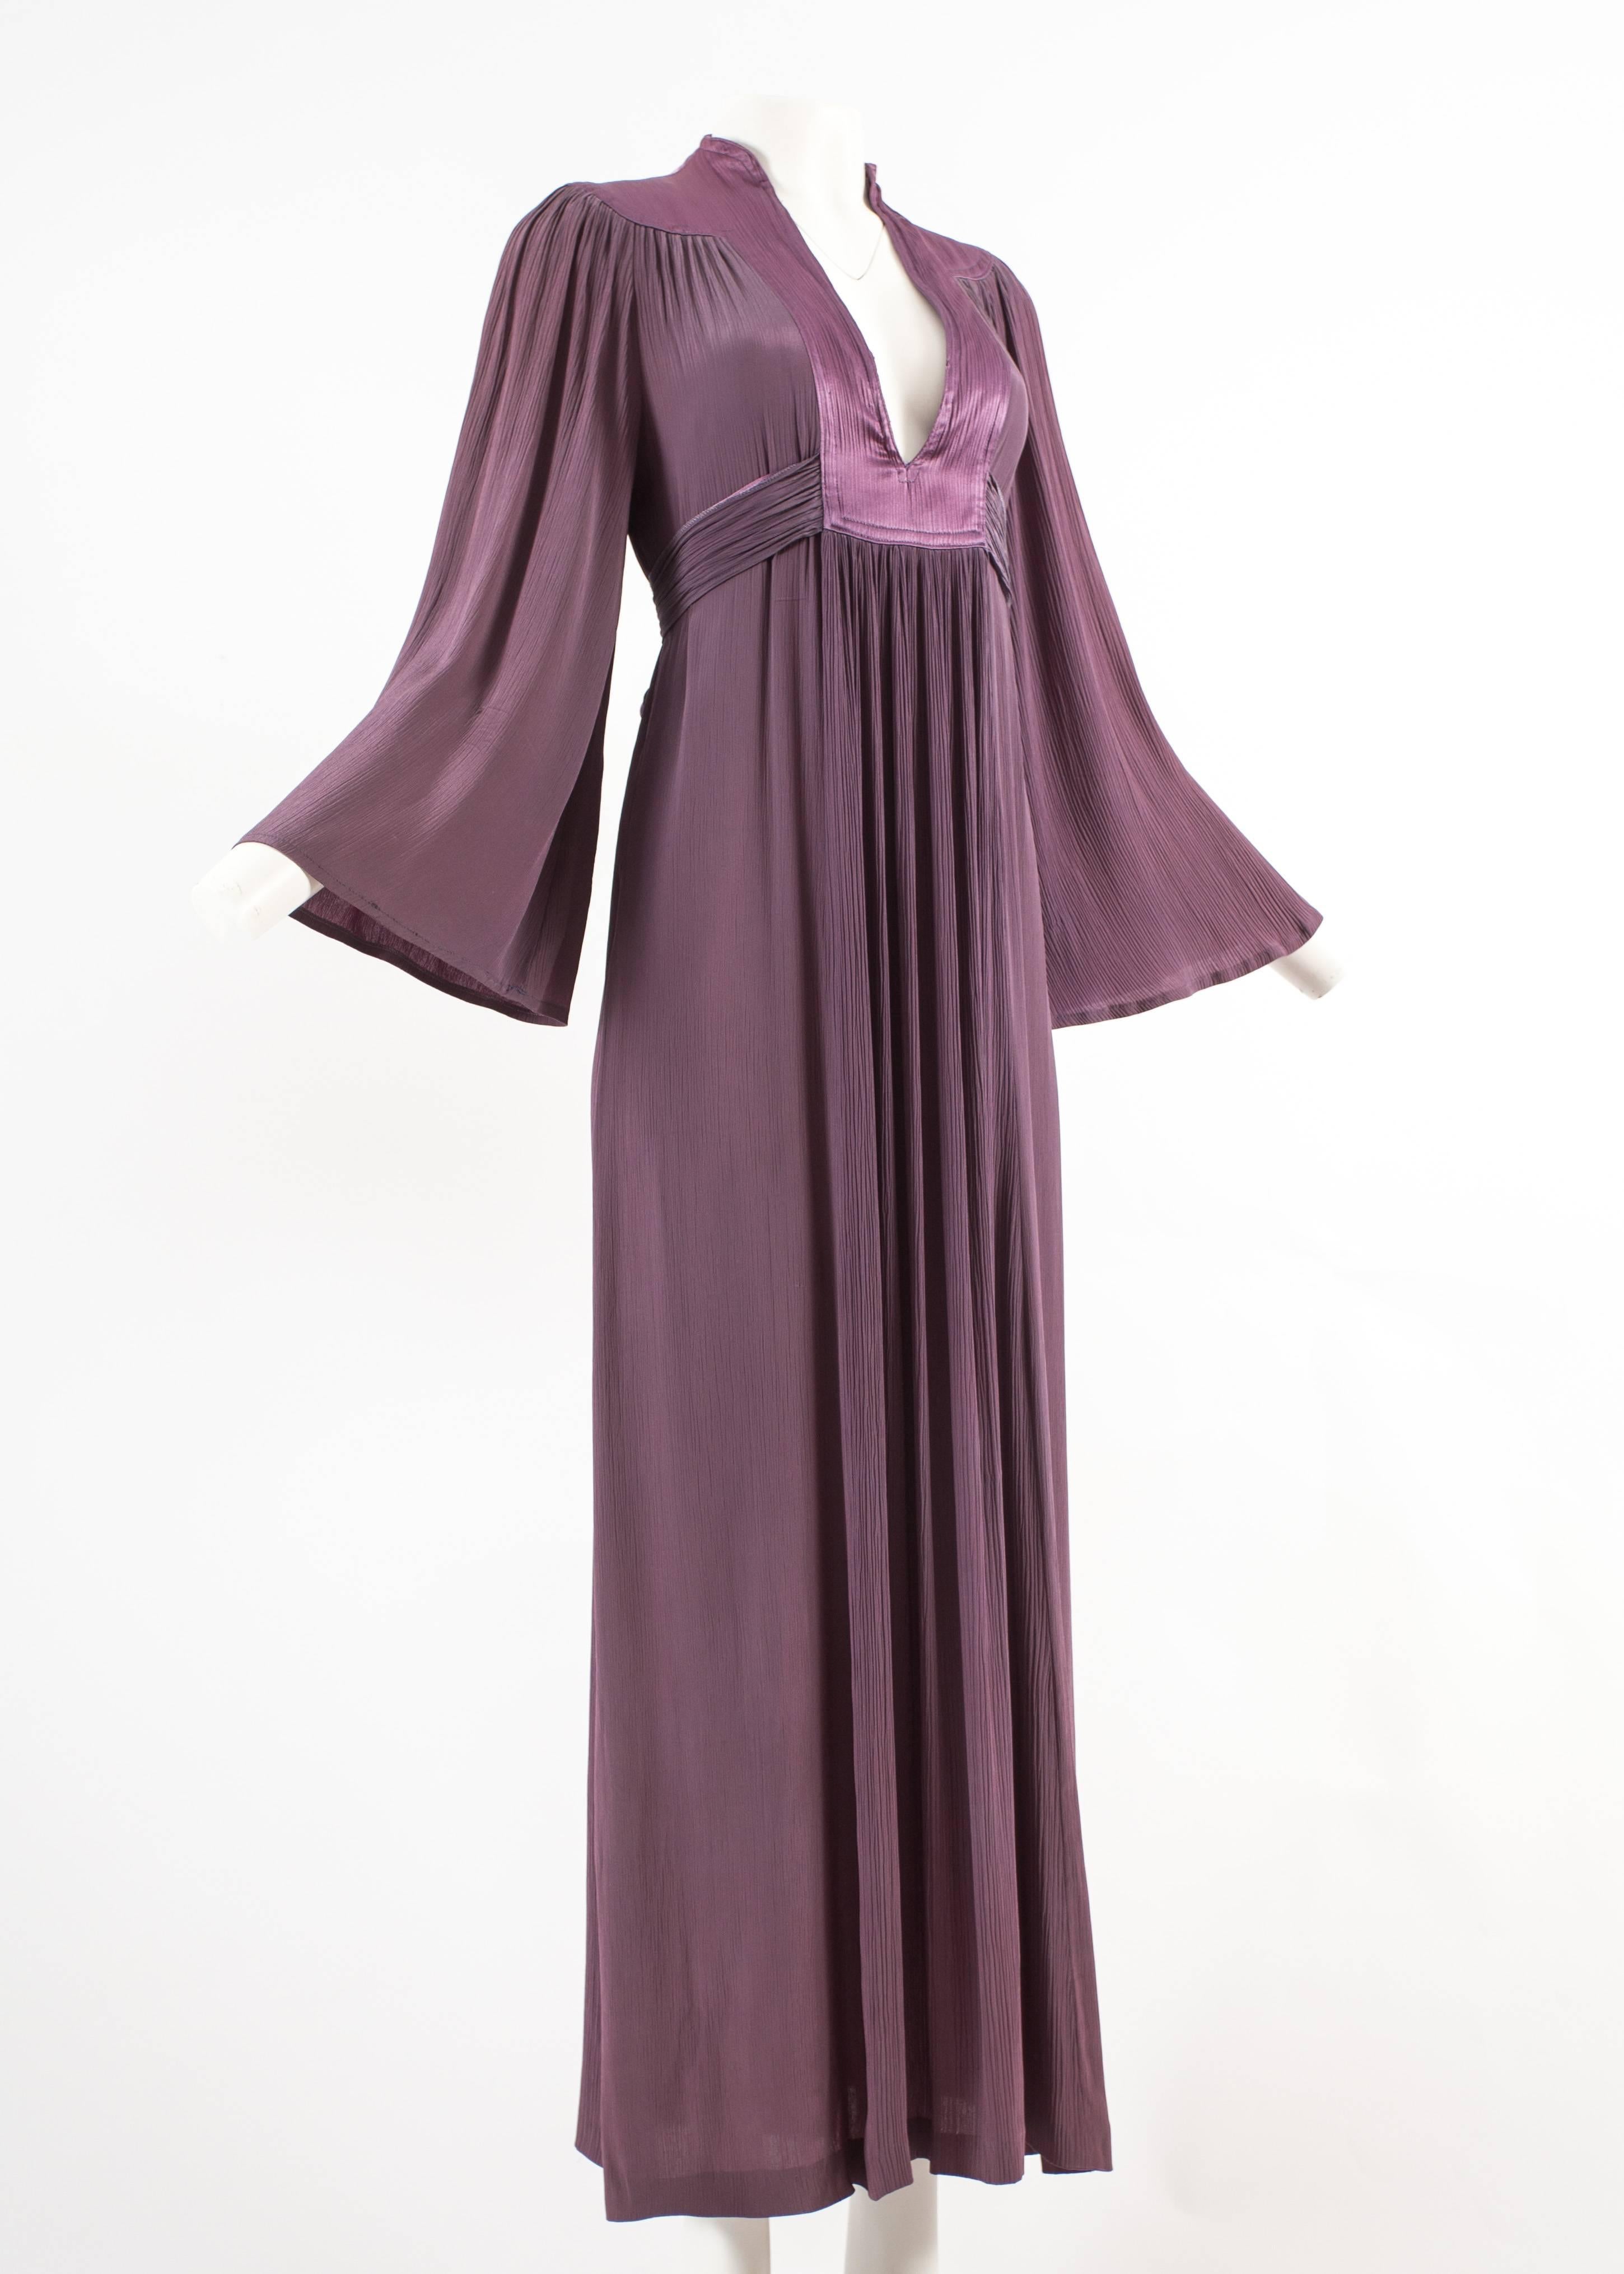 Black Ossie Clark 1970 pleated purple evening dress